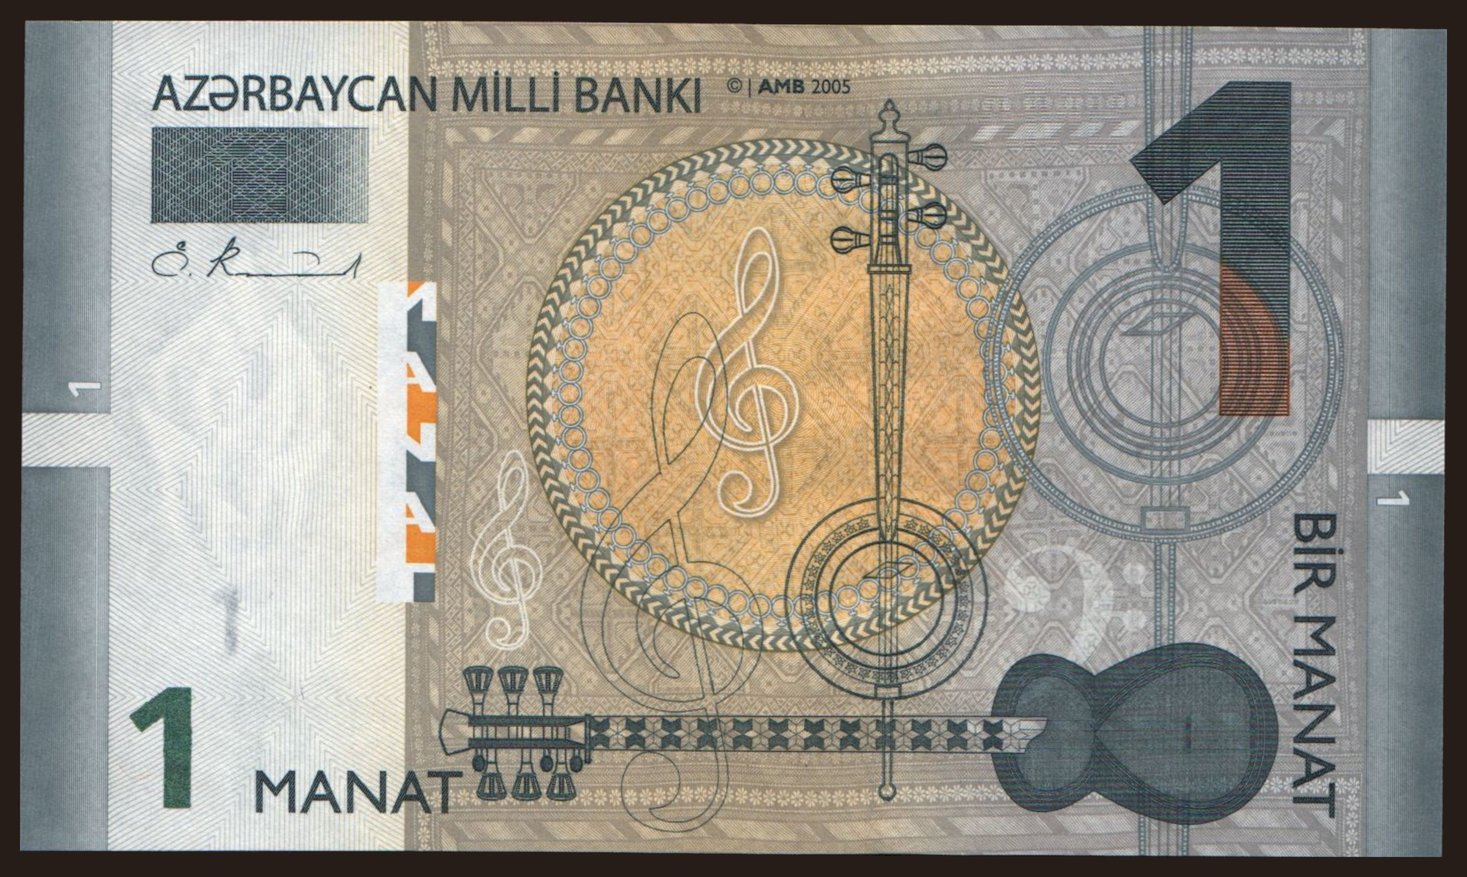 20 Coin Azerbaijani Manat Stock Photo 794081575 | Shutterstock